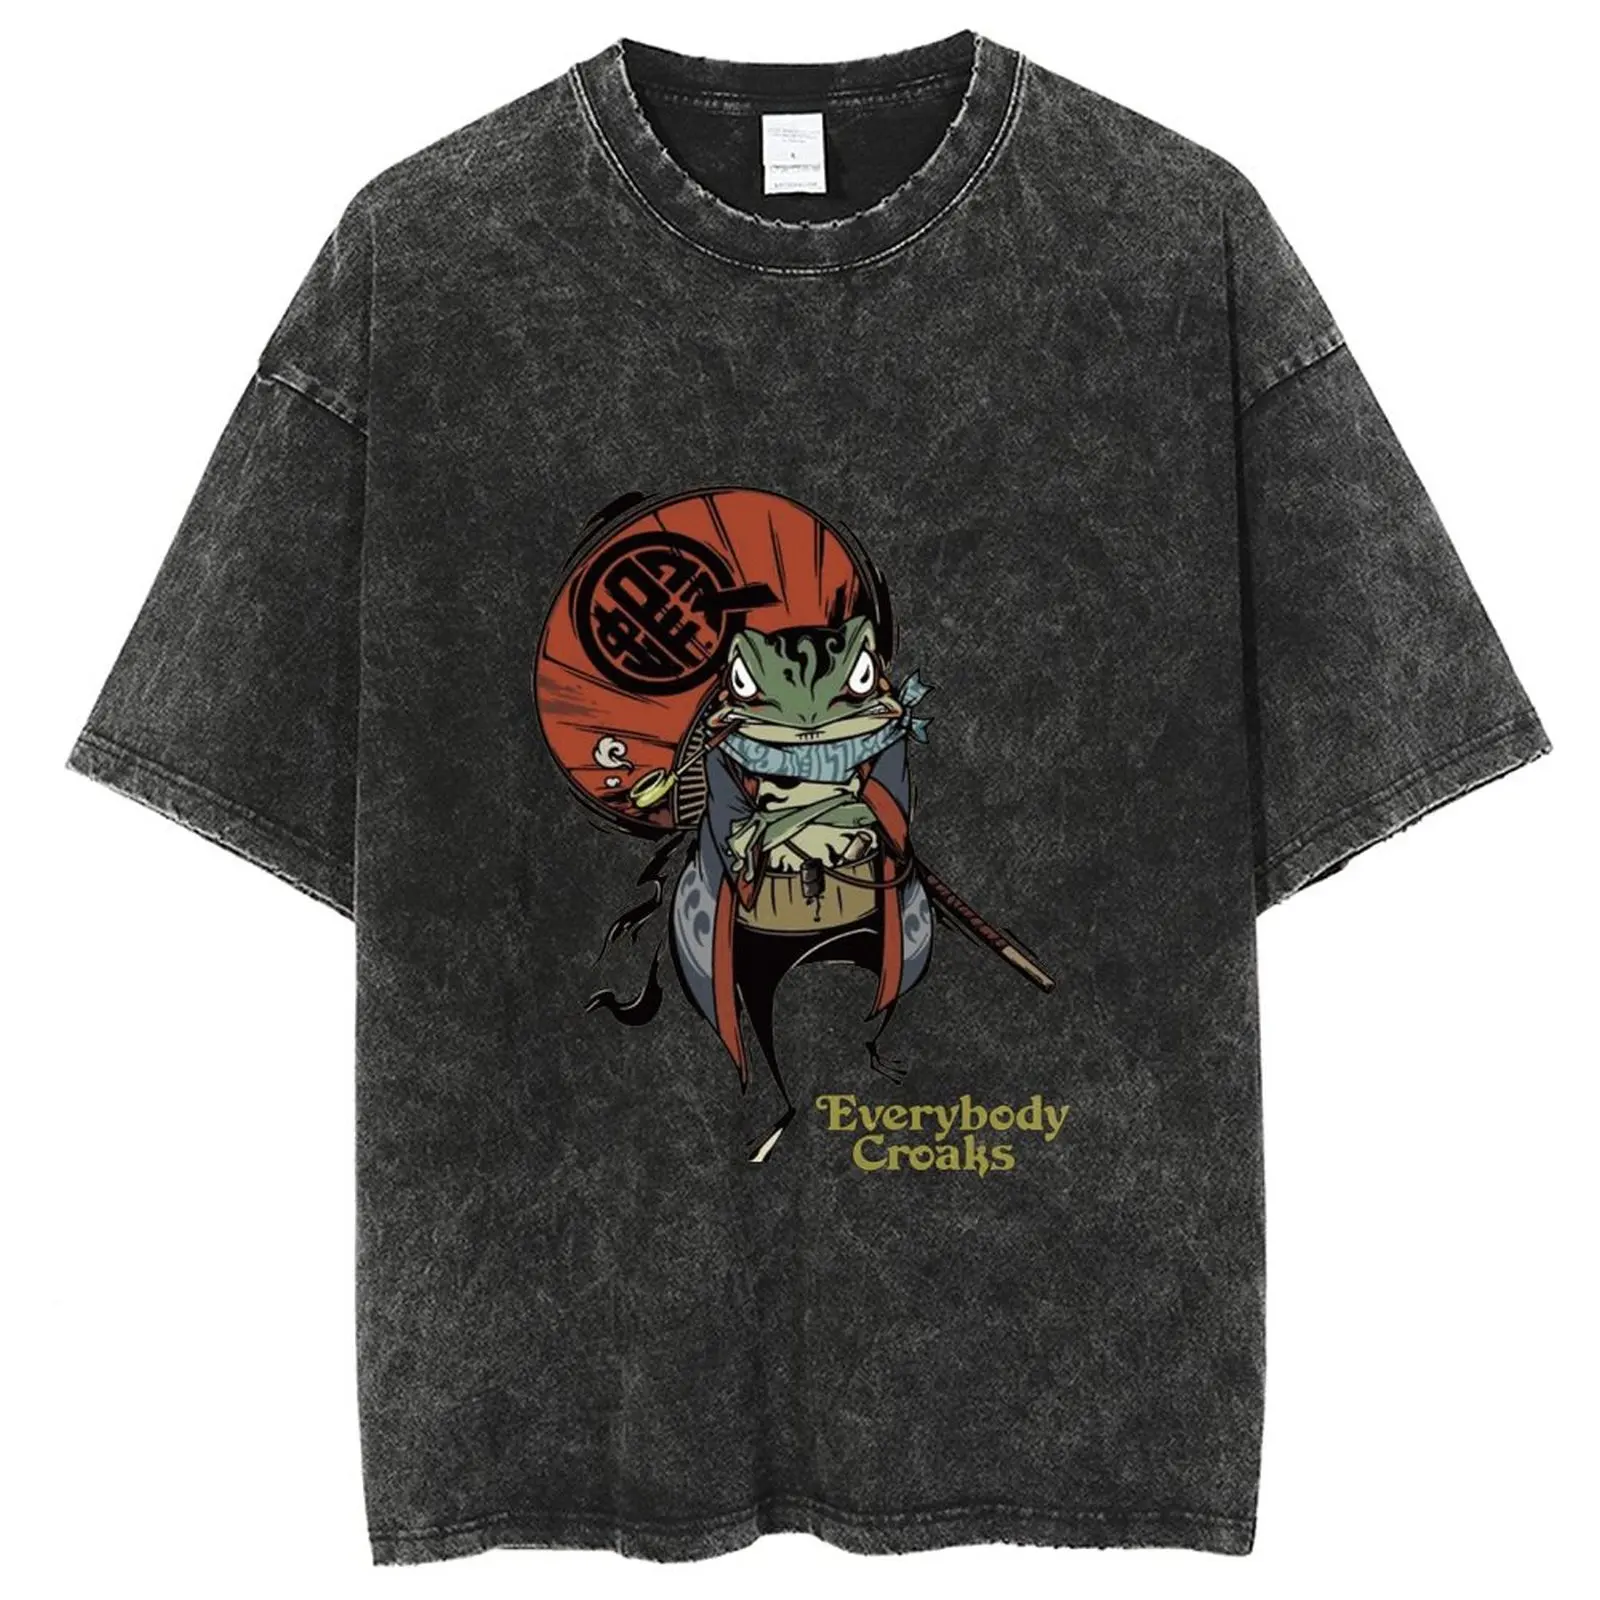 

Washed T Shirt For Men, Berserk Style T-shirt, 100% Cotton Short Sleeve Women, Anime Guts Skull Knight Graphic Men's clothing